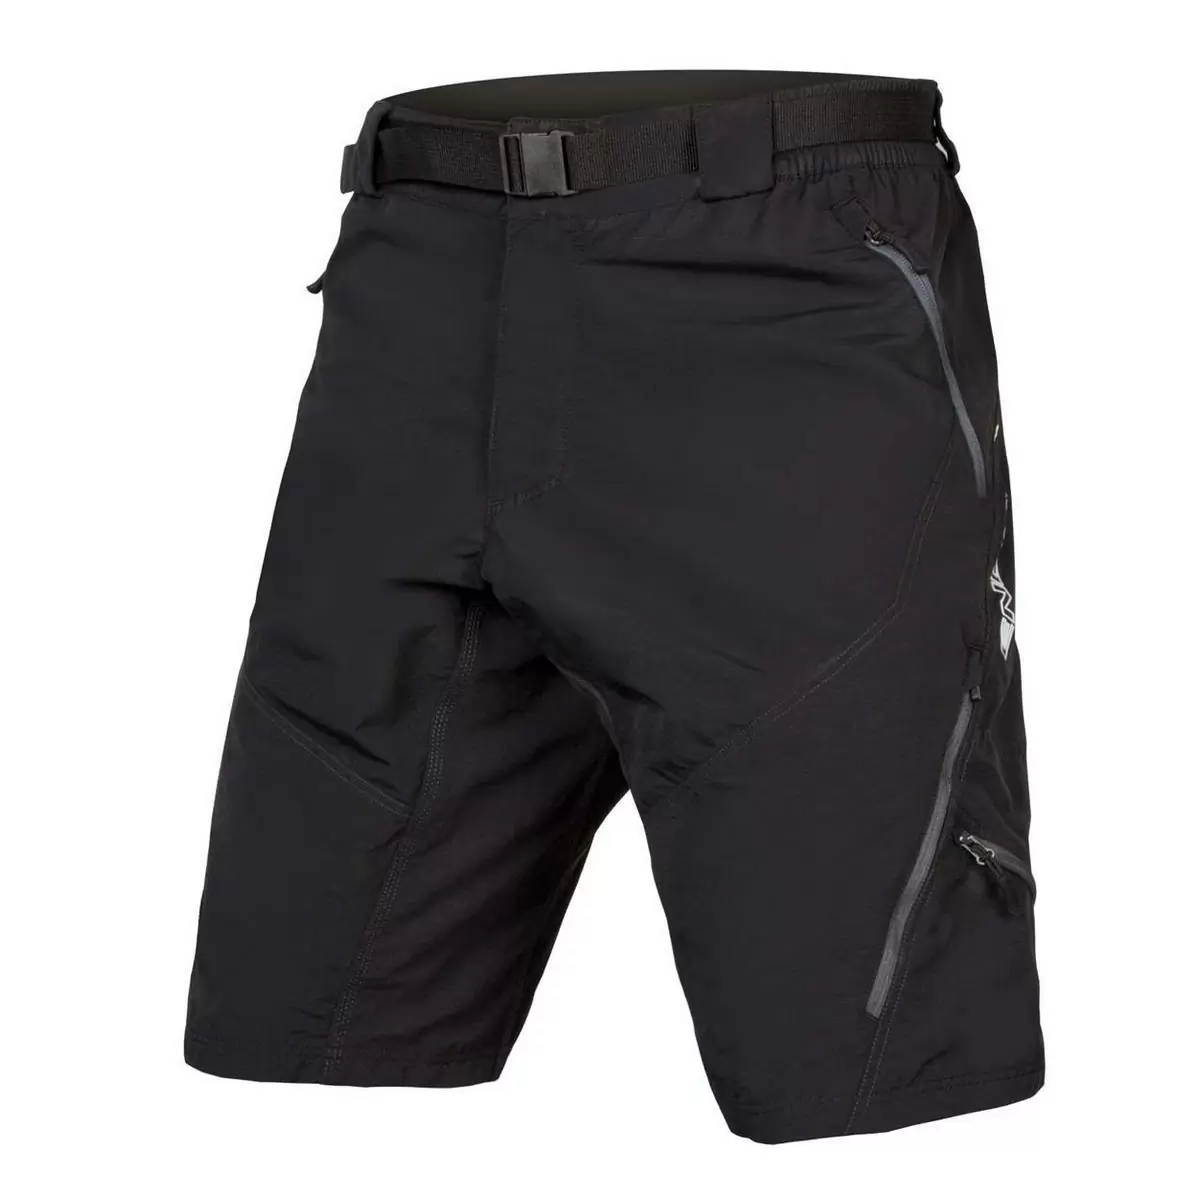 Pantaloncini con fondello Hummvee Short II nero taglia S - image